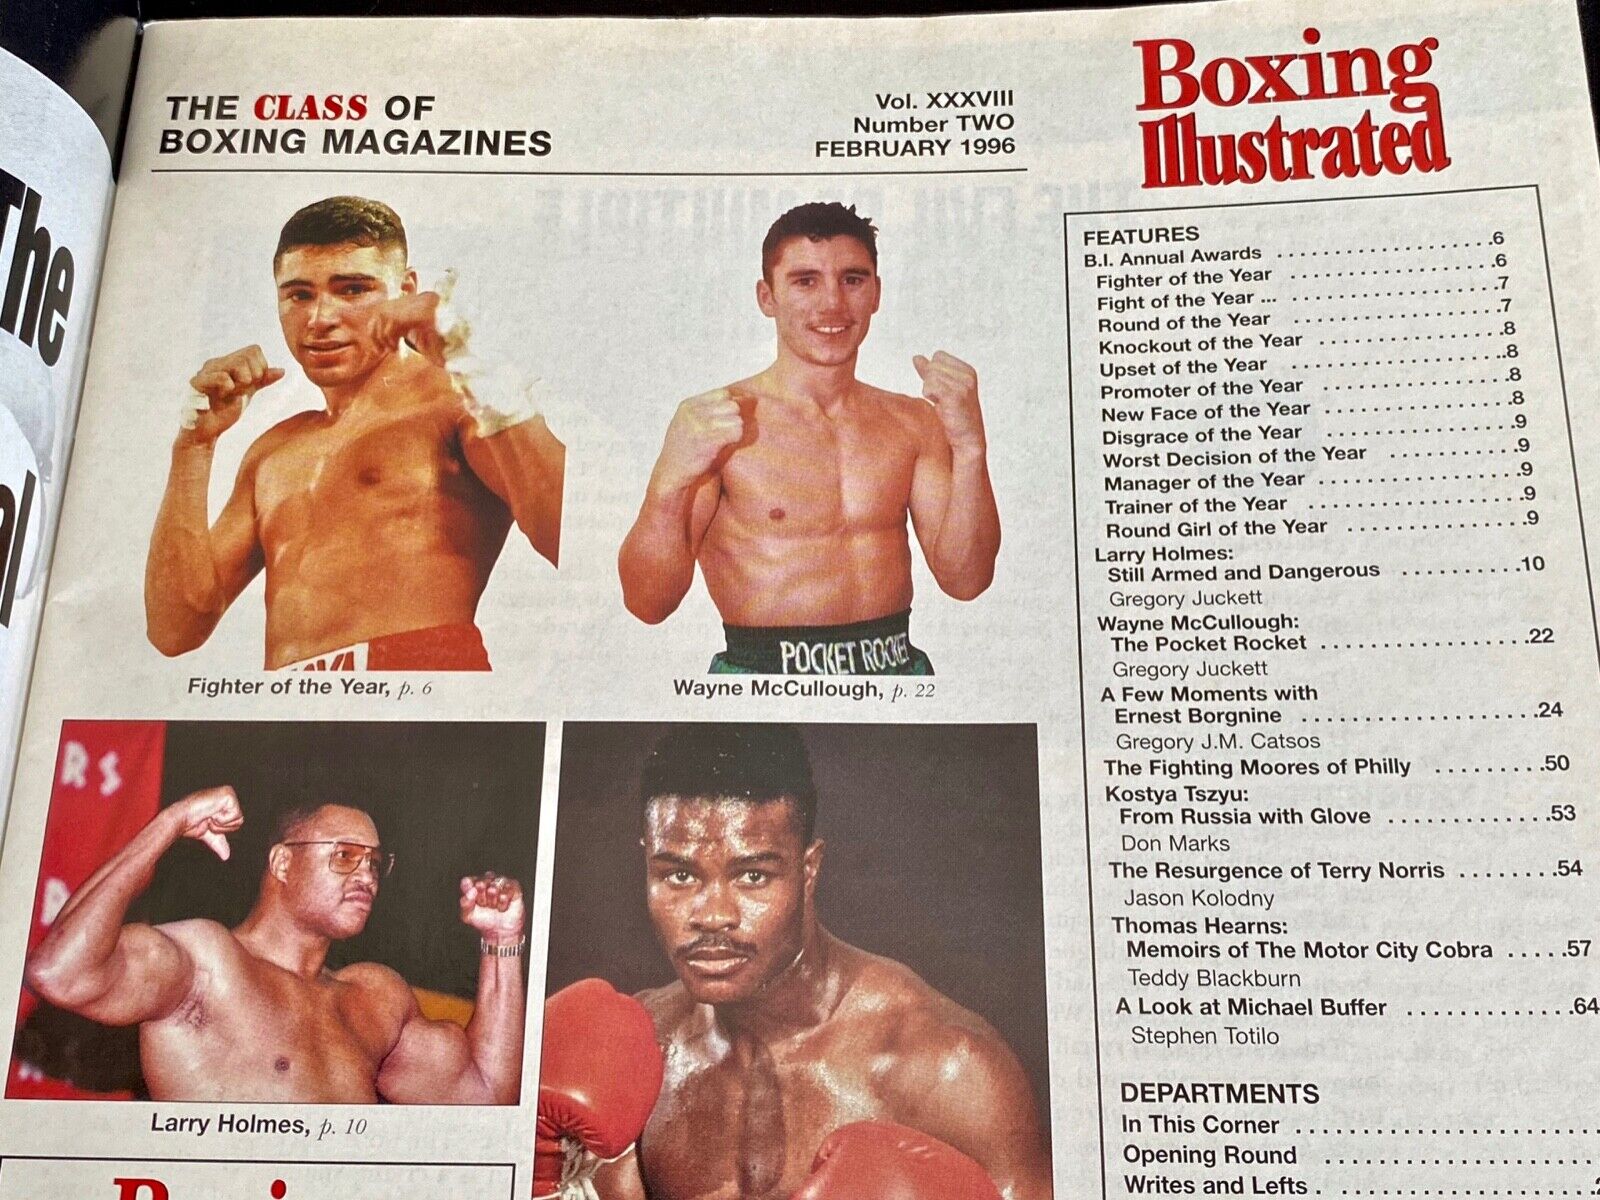 OSCAR DELA HOYA "FIGHER OF THE YEAR"- BOXING DIGEST (2/96) + BUDWEISER PROMO Boxing Digest & Budweiser - фотография #2